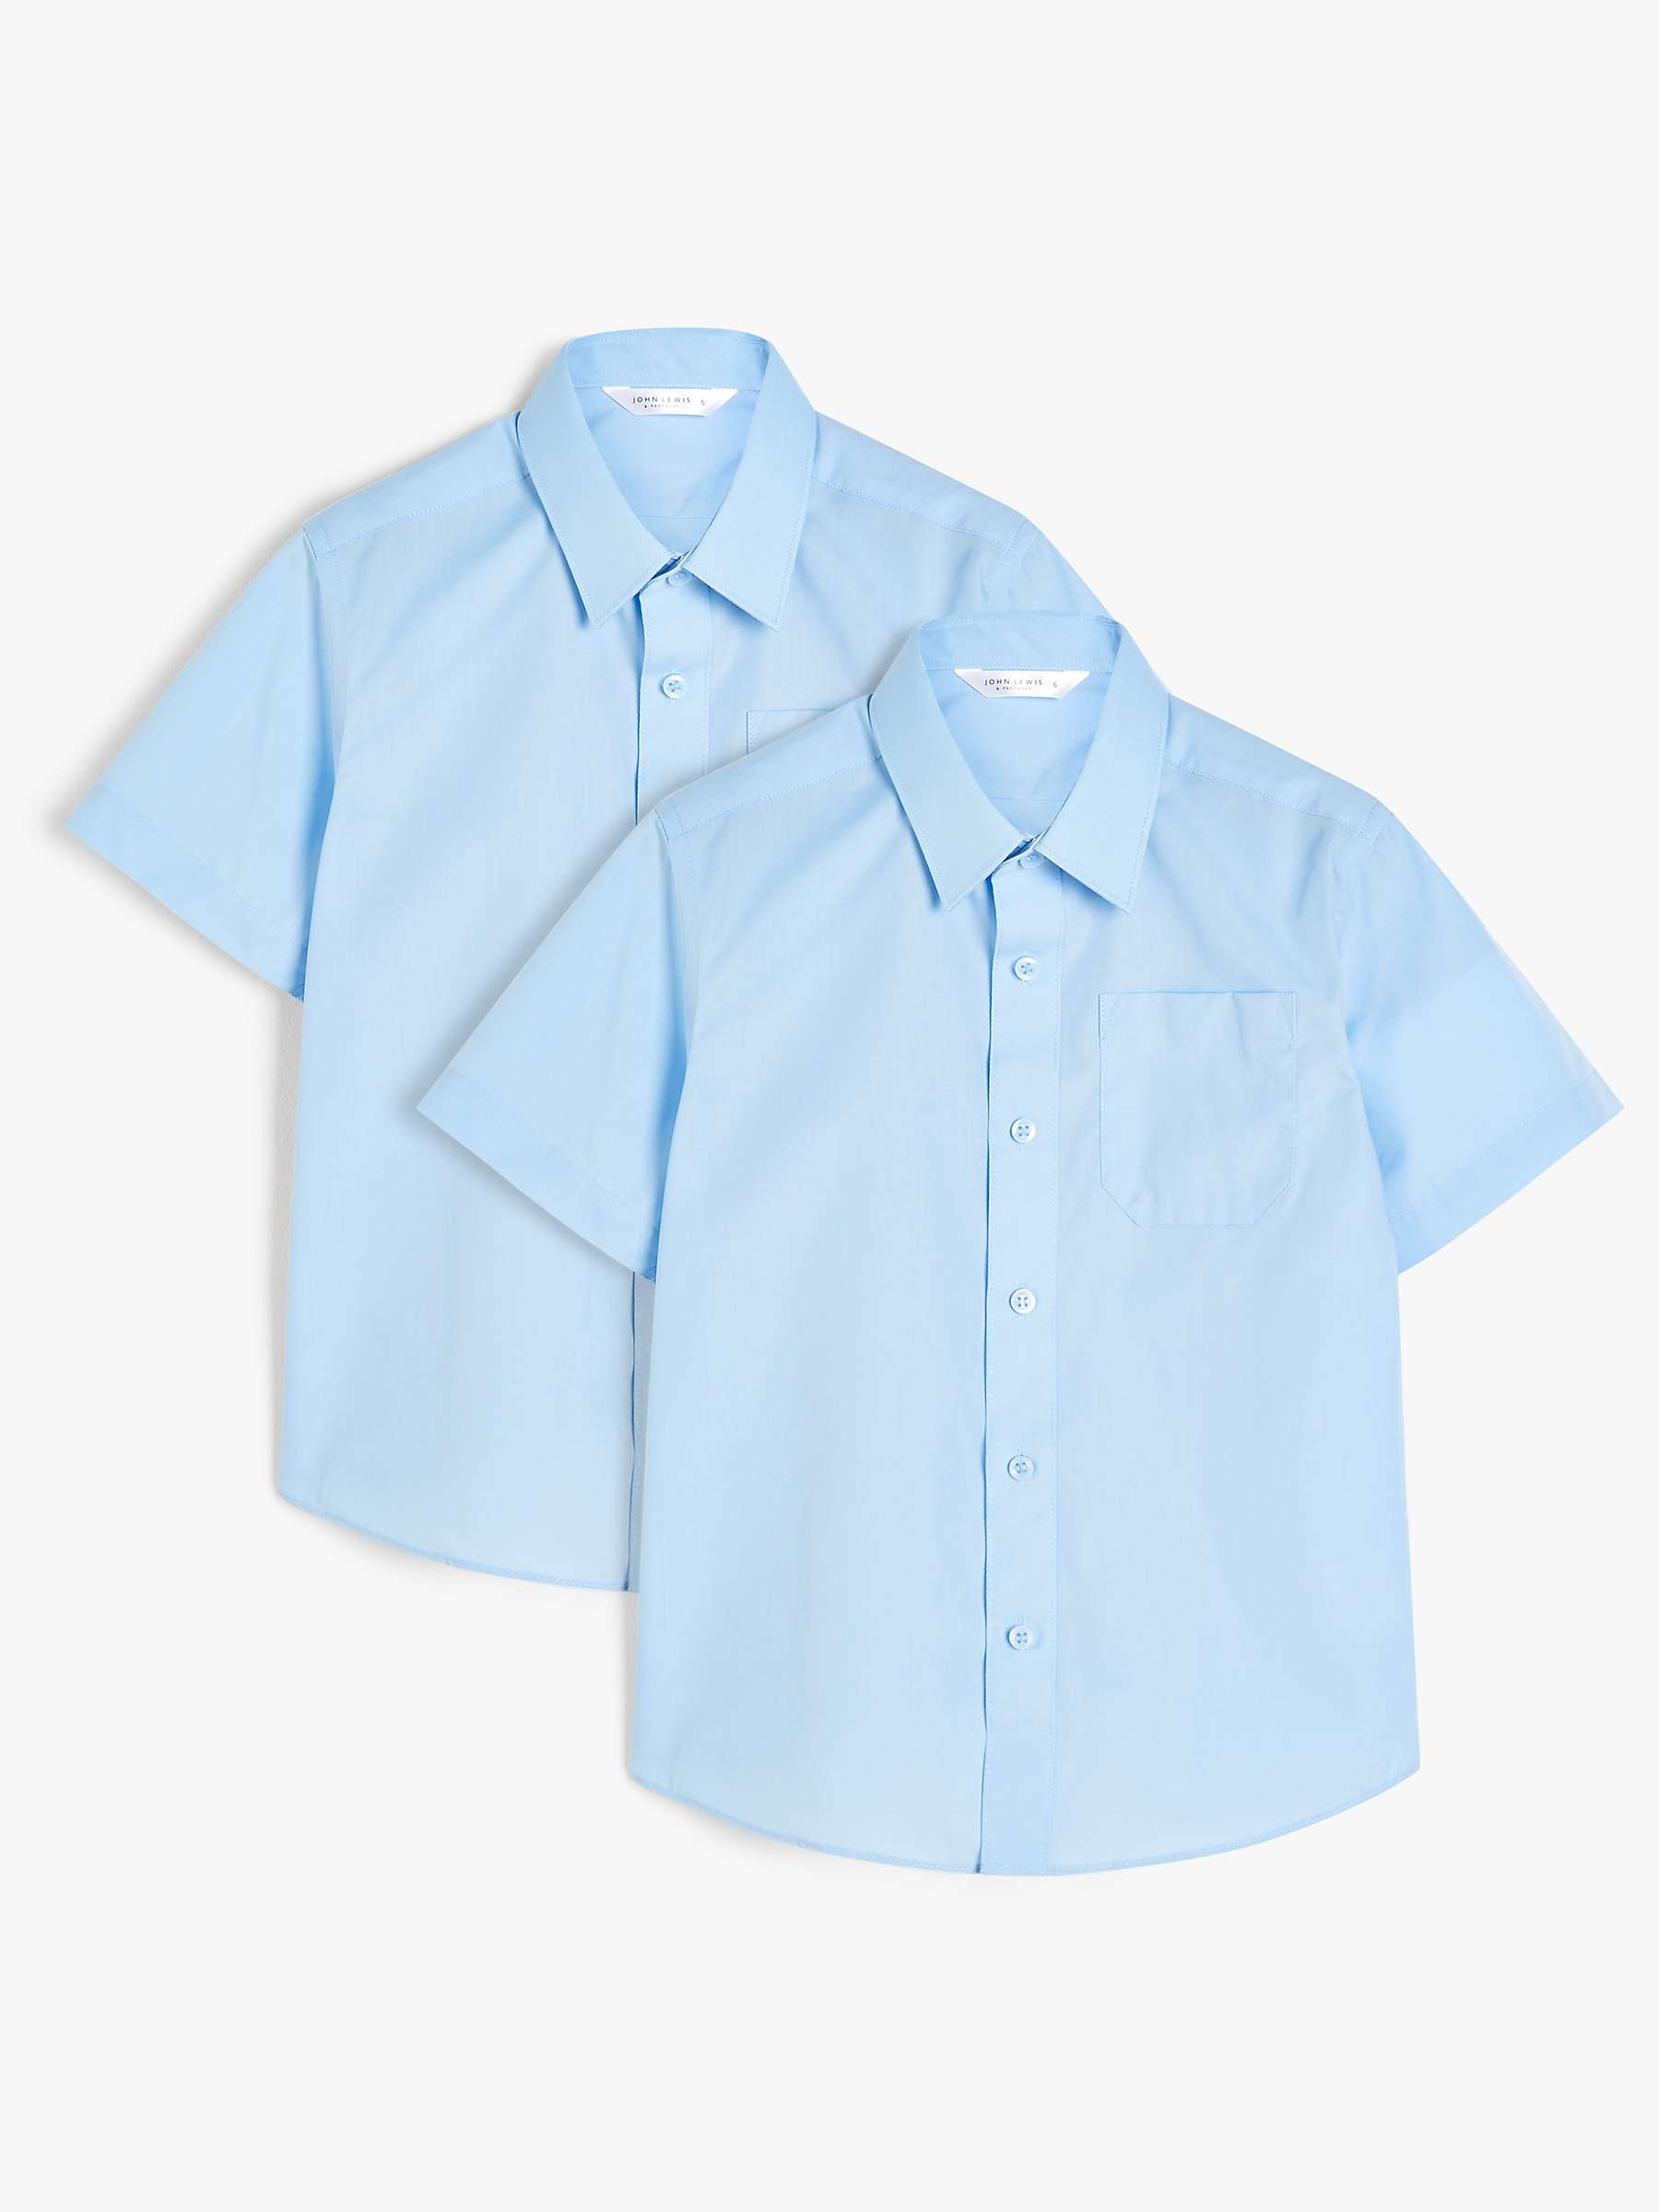 Buy John Lewis Boys' Short Sleeved Stain Resistant Easy Care Shirt, Pack of 2 Online at johnlewis.com